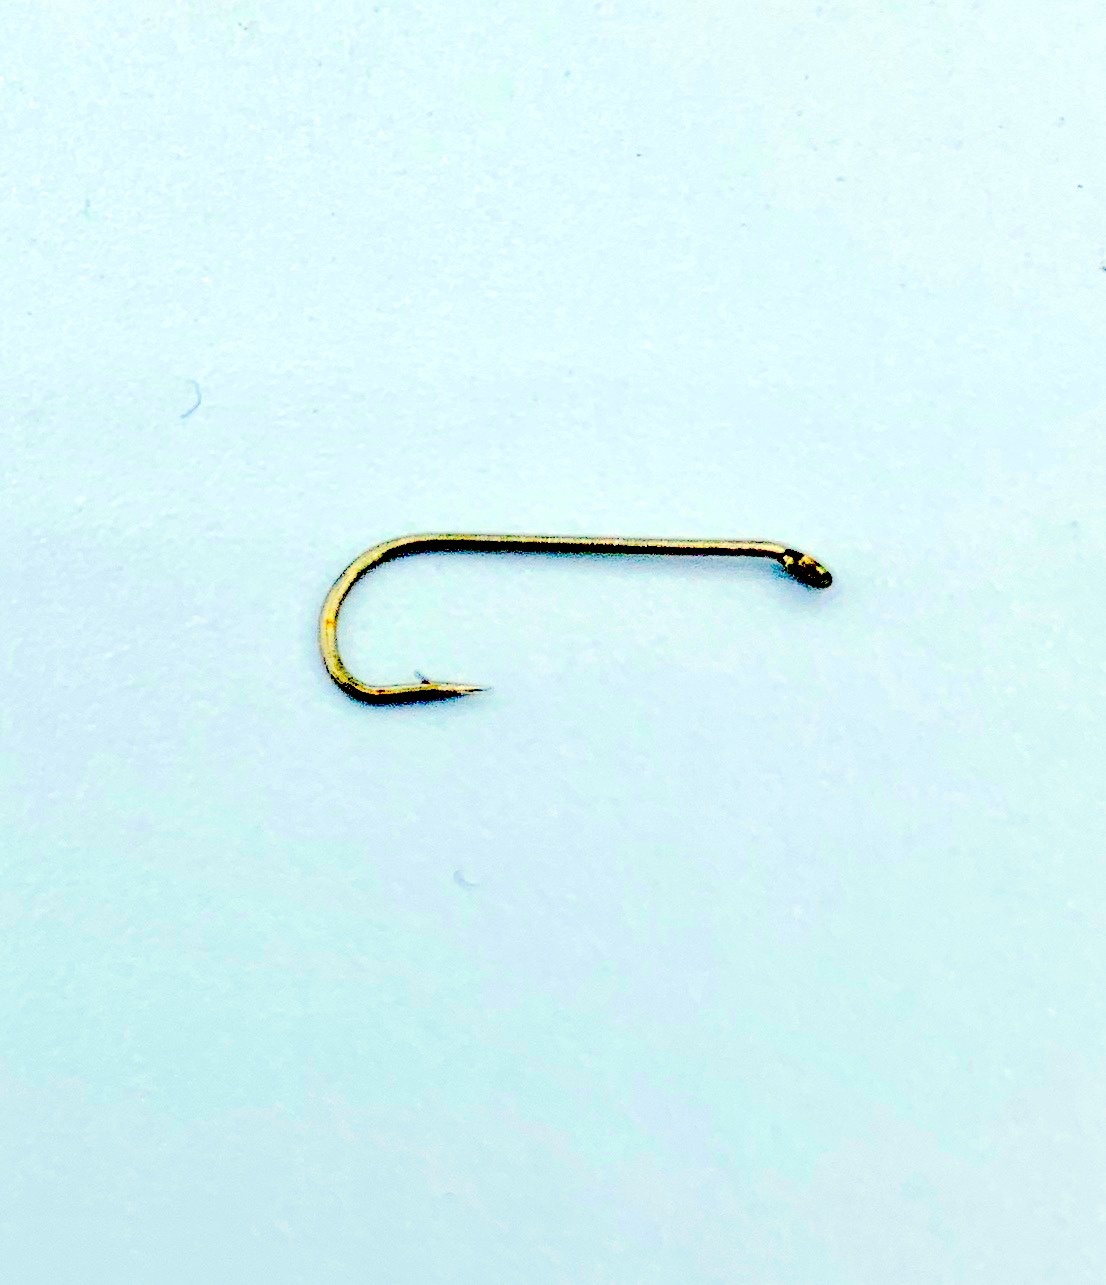 Mustad Signature Dry Fly Hook